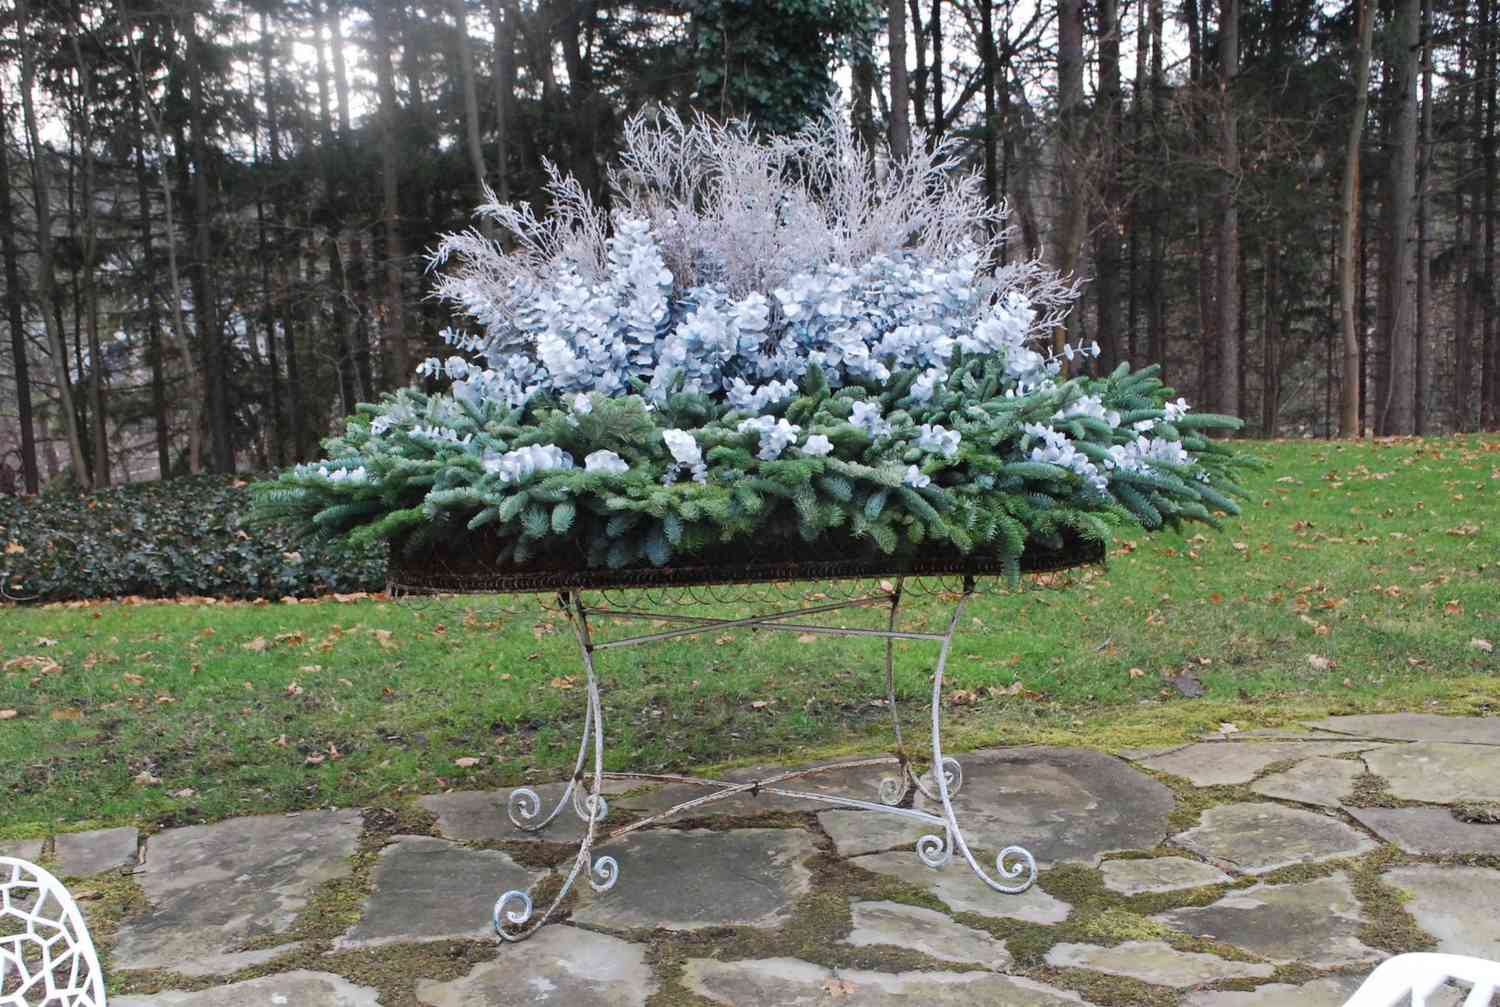 arreglo invernal en mesa exterior con ramas de hoja perenne, eucalipto y artemisia